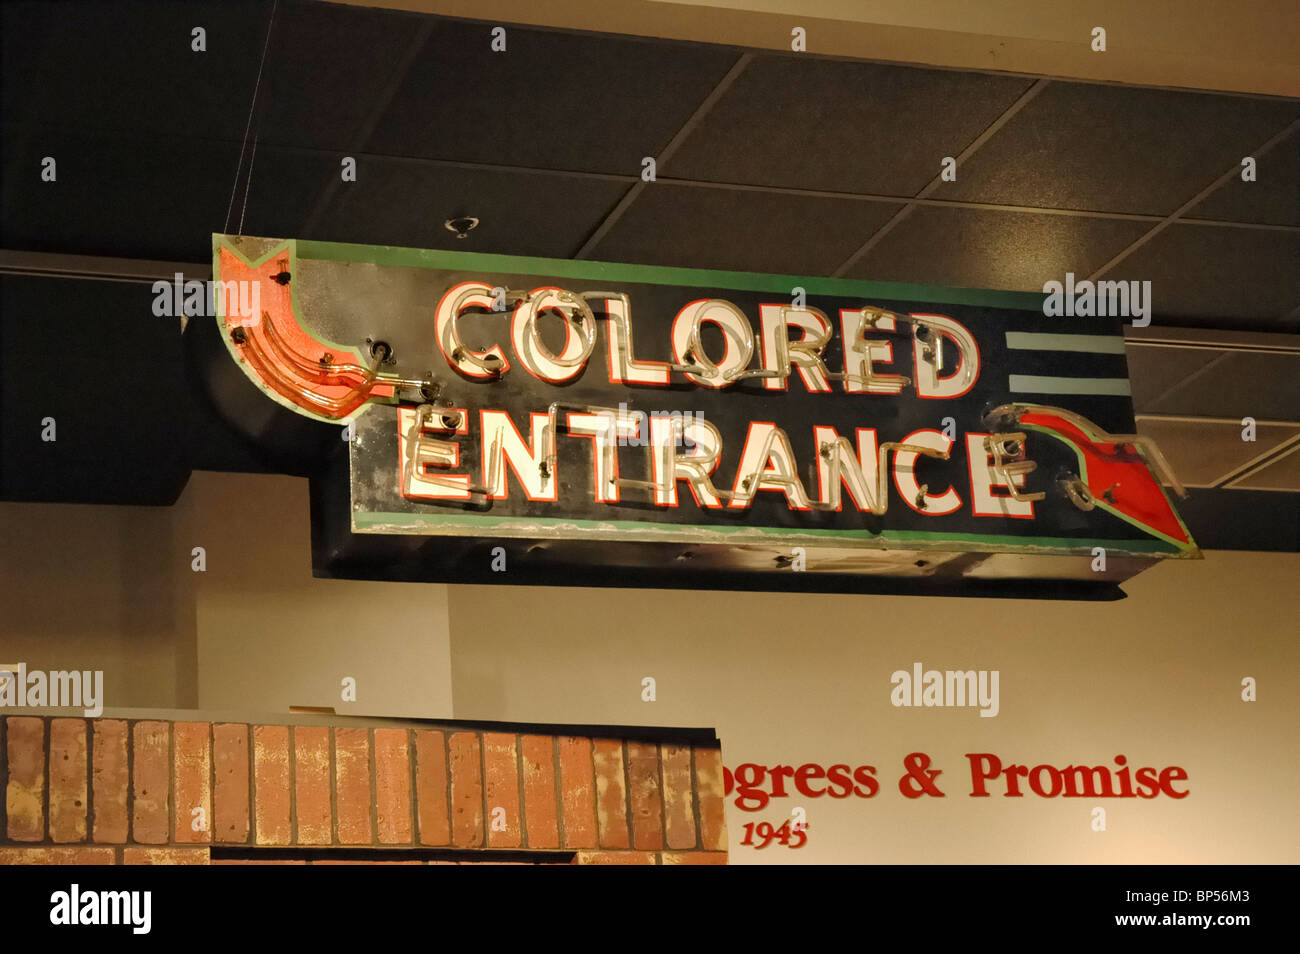 segregation signs in color